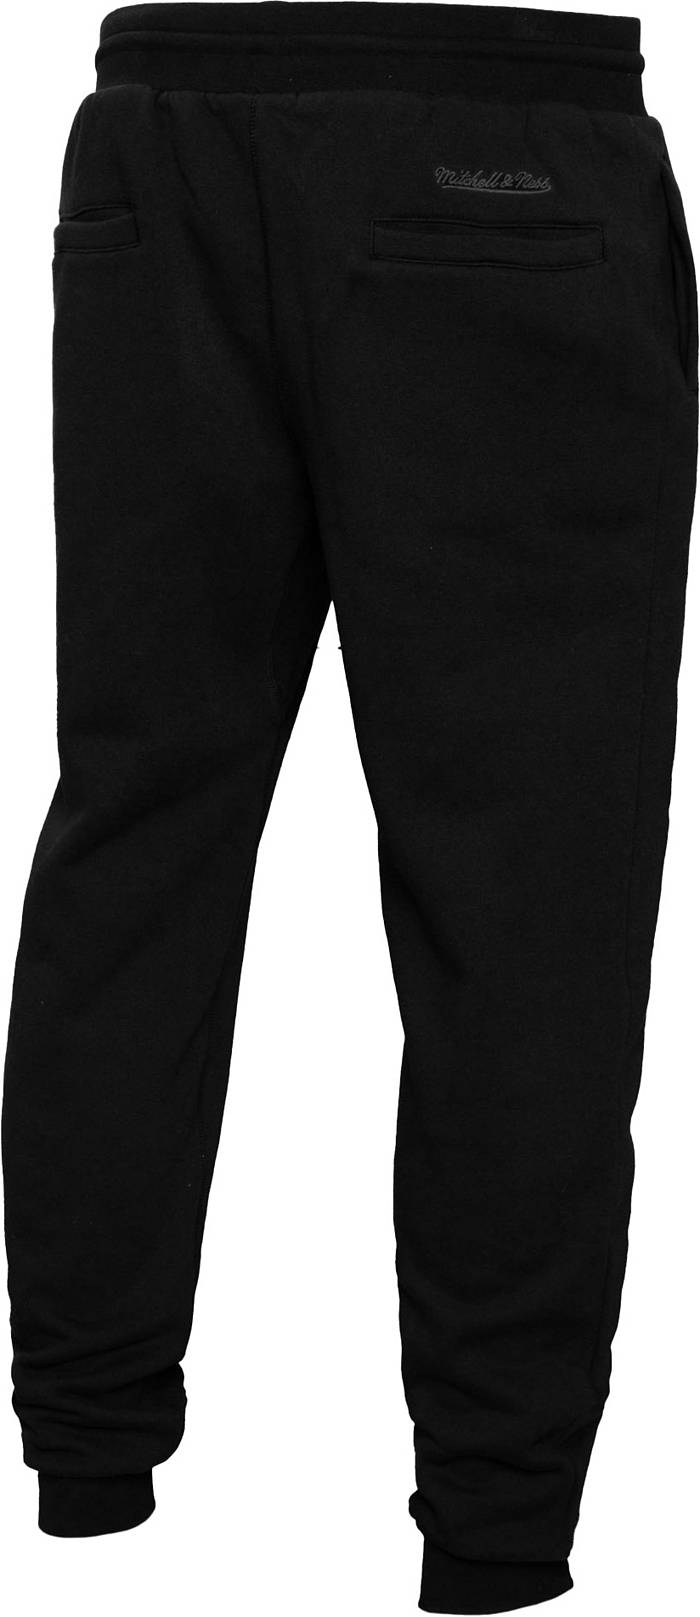 Mitchell & Ness Men's Atlanta Hawks Black Slap Sticker Pants